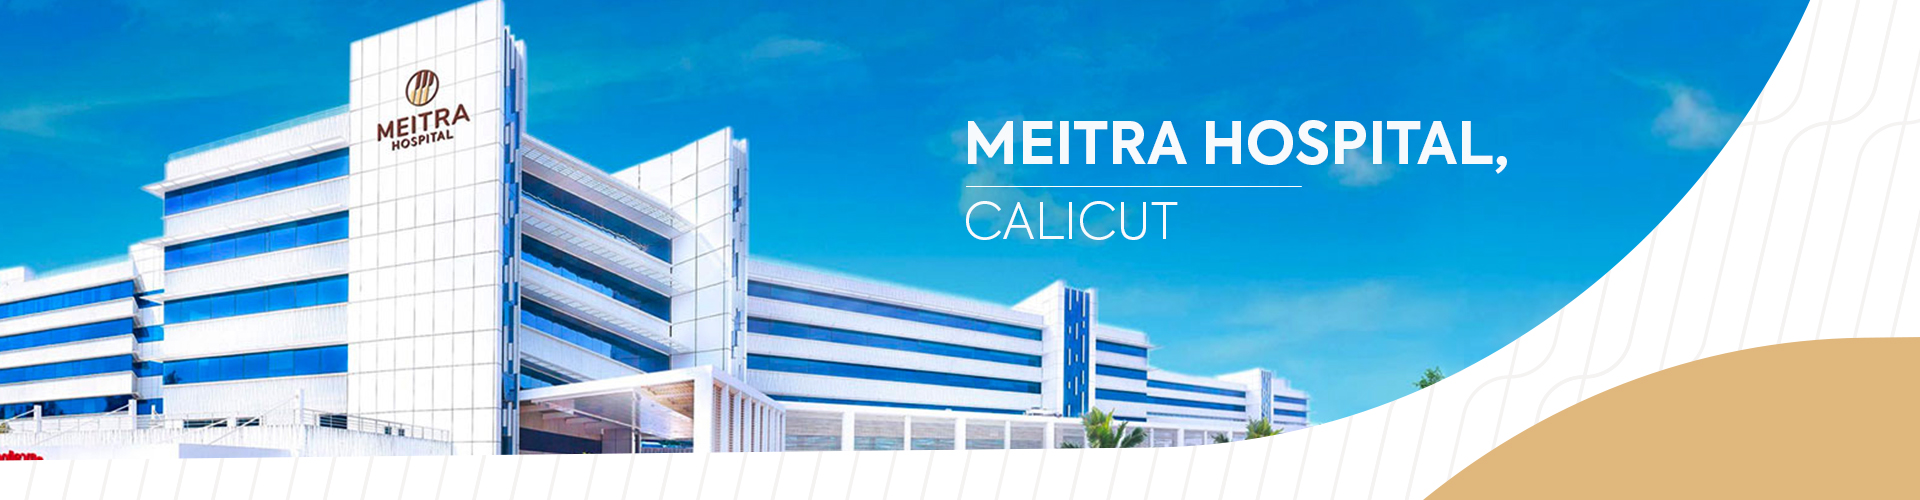 Meitra Hospital, Calicut